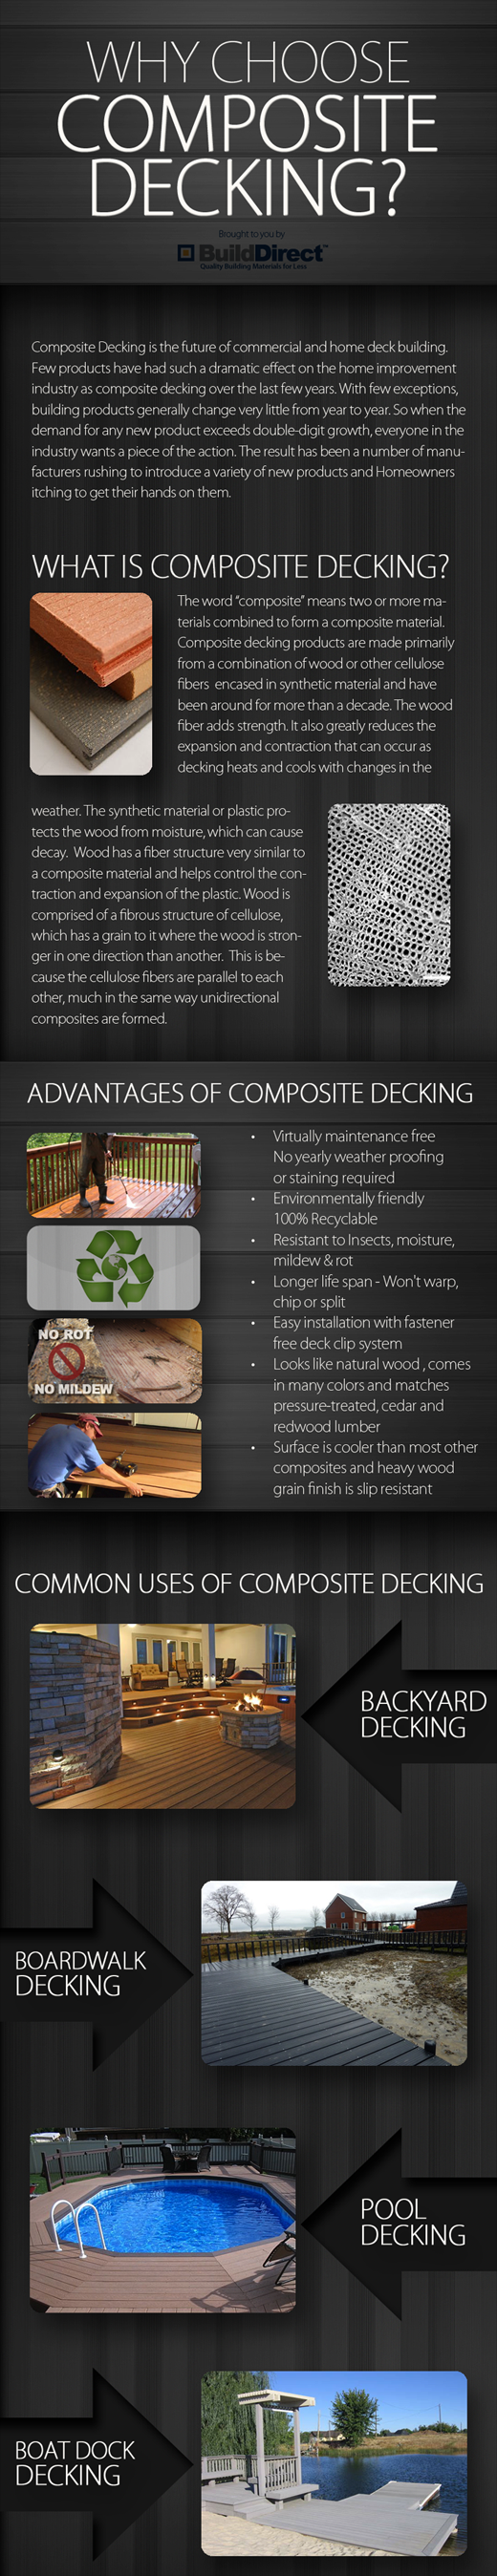 Composite Decking Basics